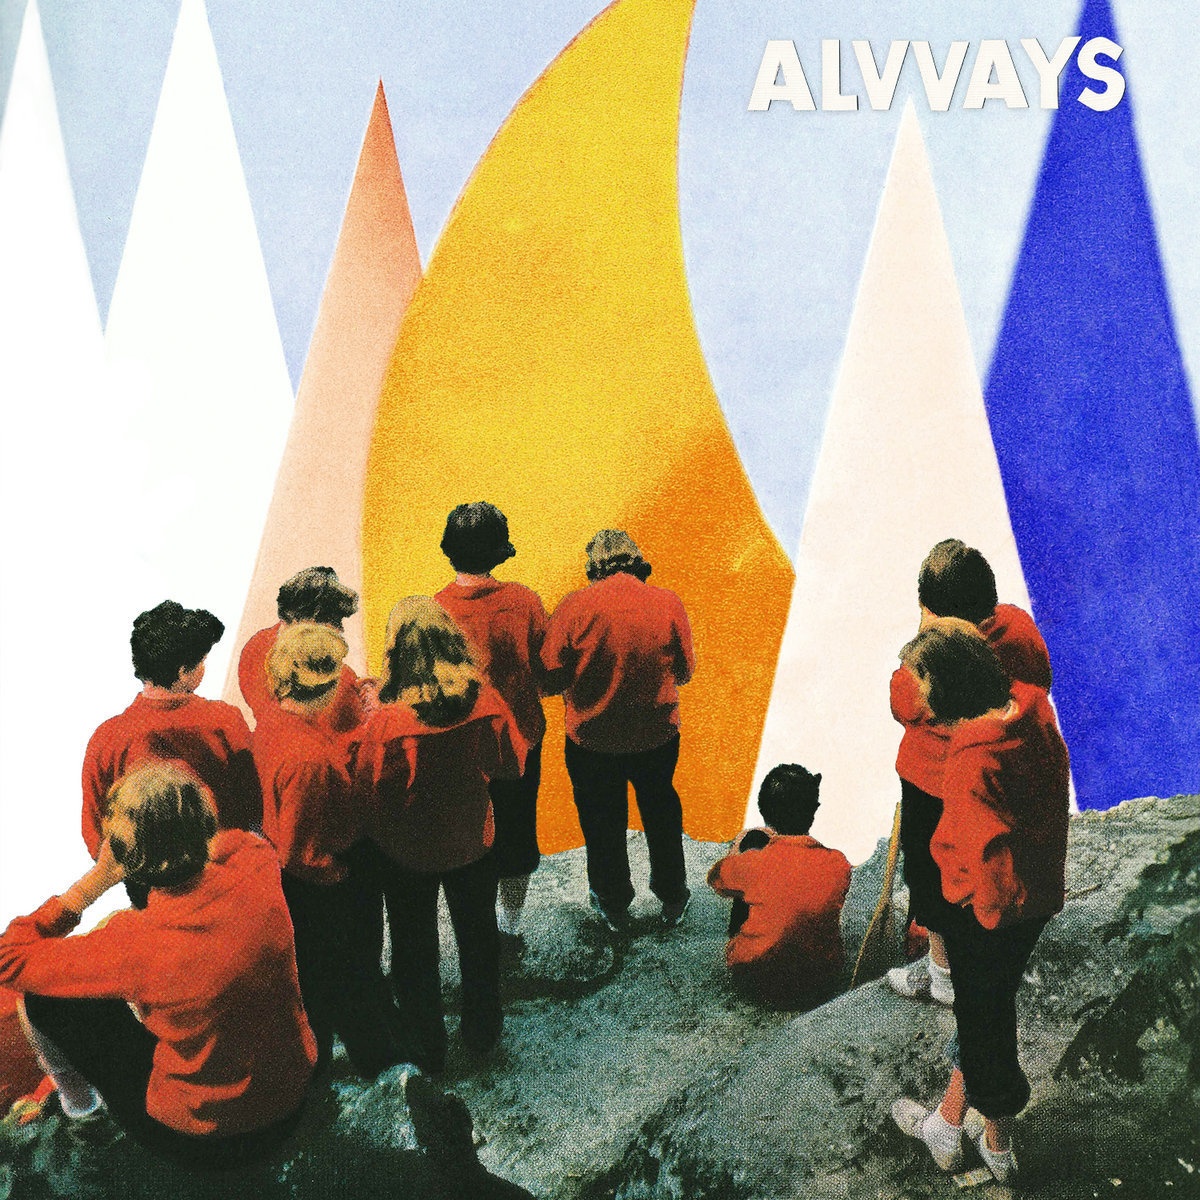 Alvvays - Antisocialites vinyl cover